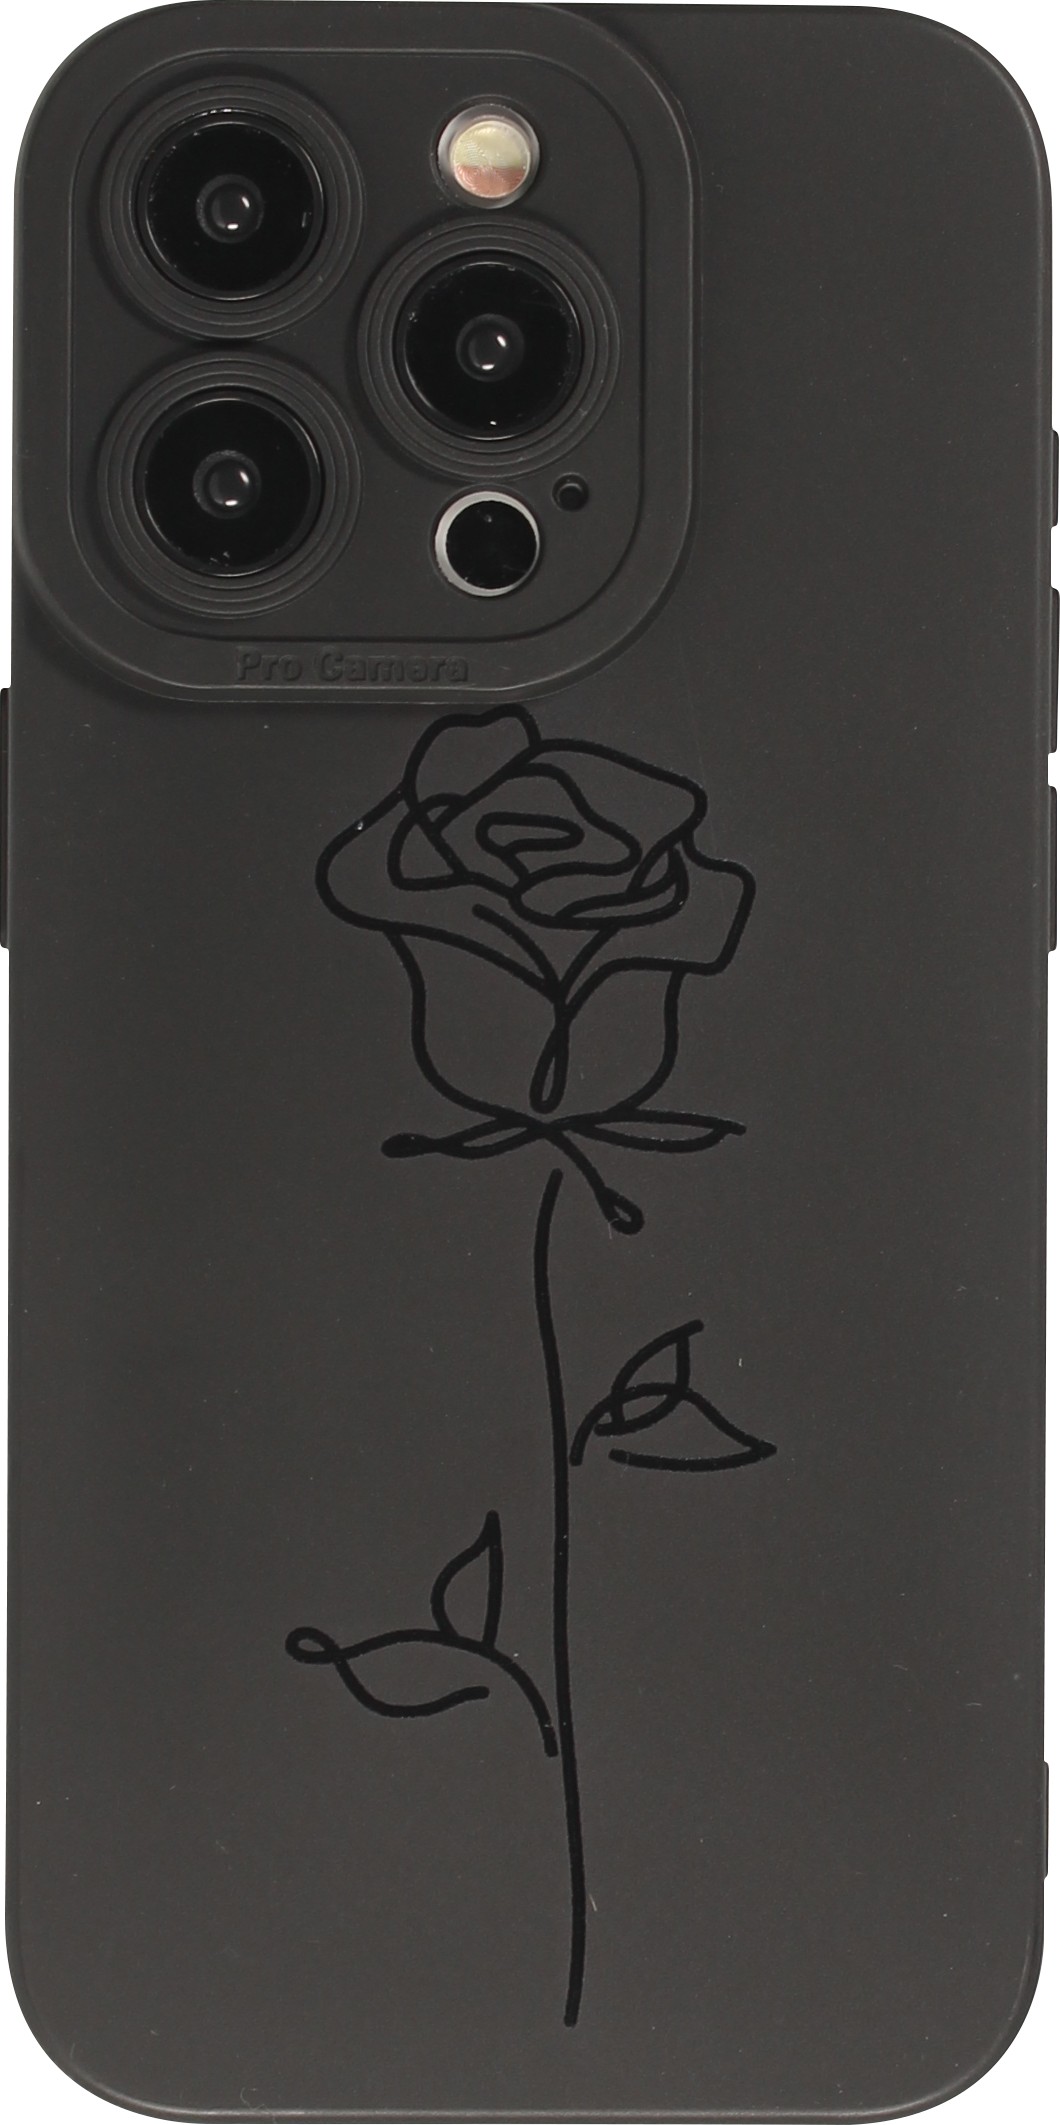 Coque silicone avec protection caméra iPhone 11 Pro Max (rose) 